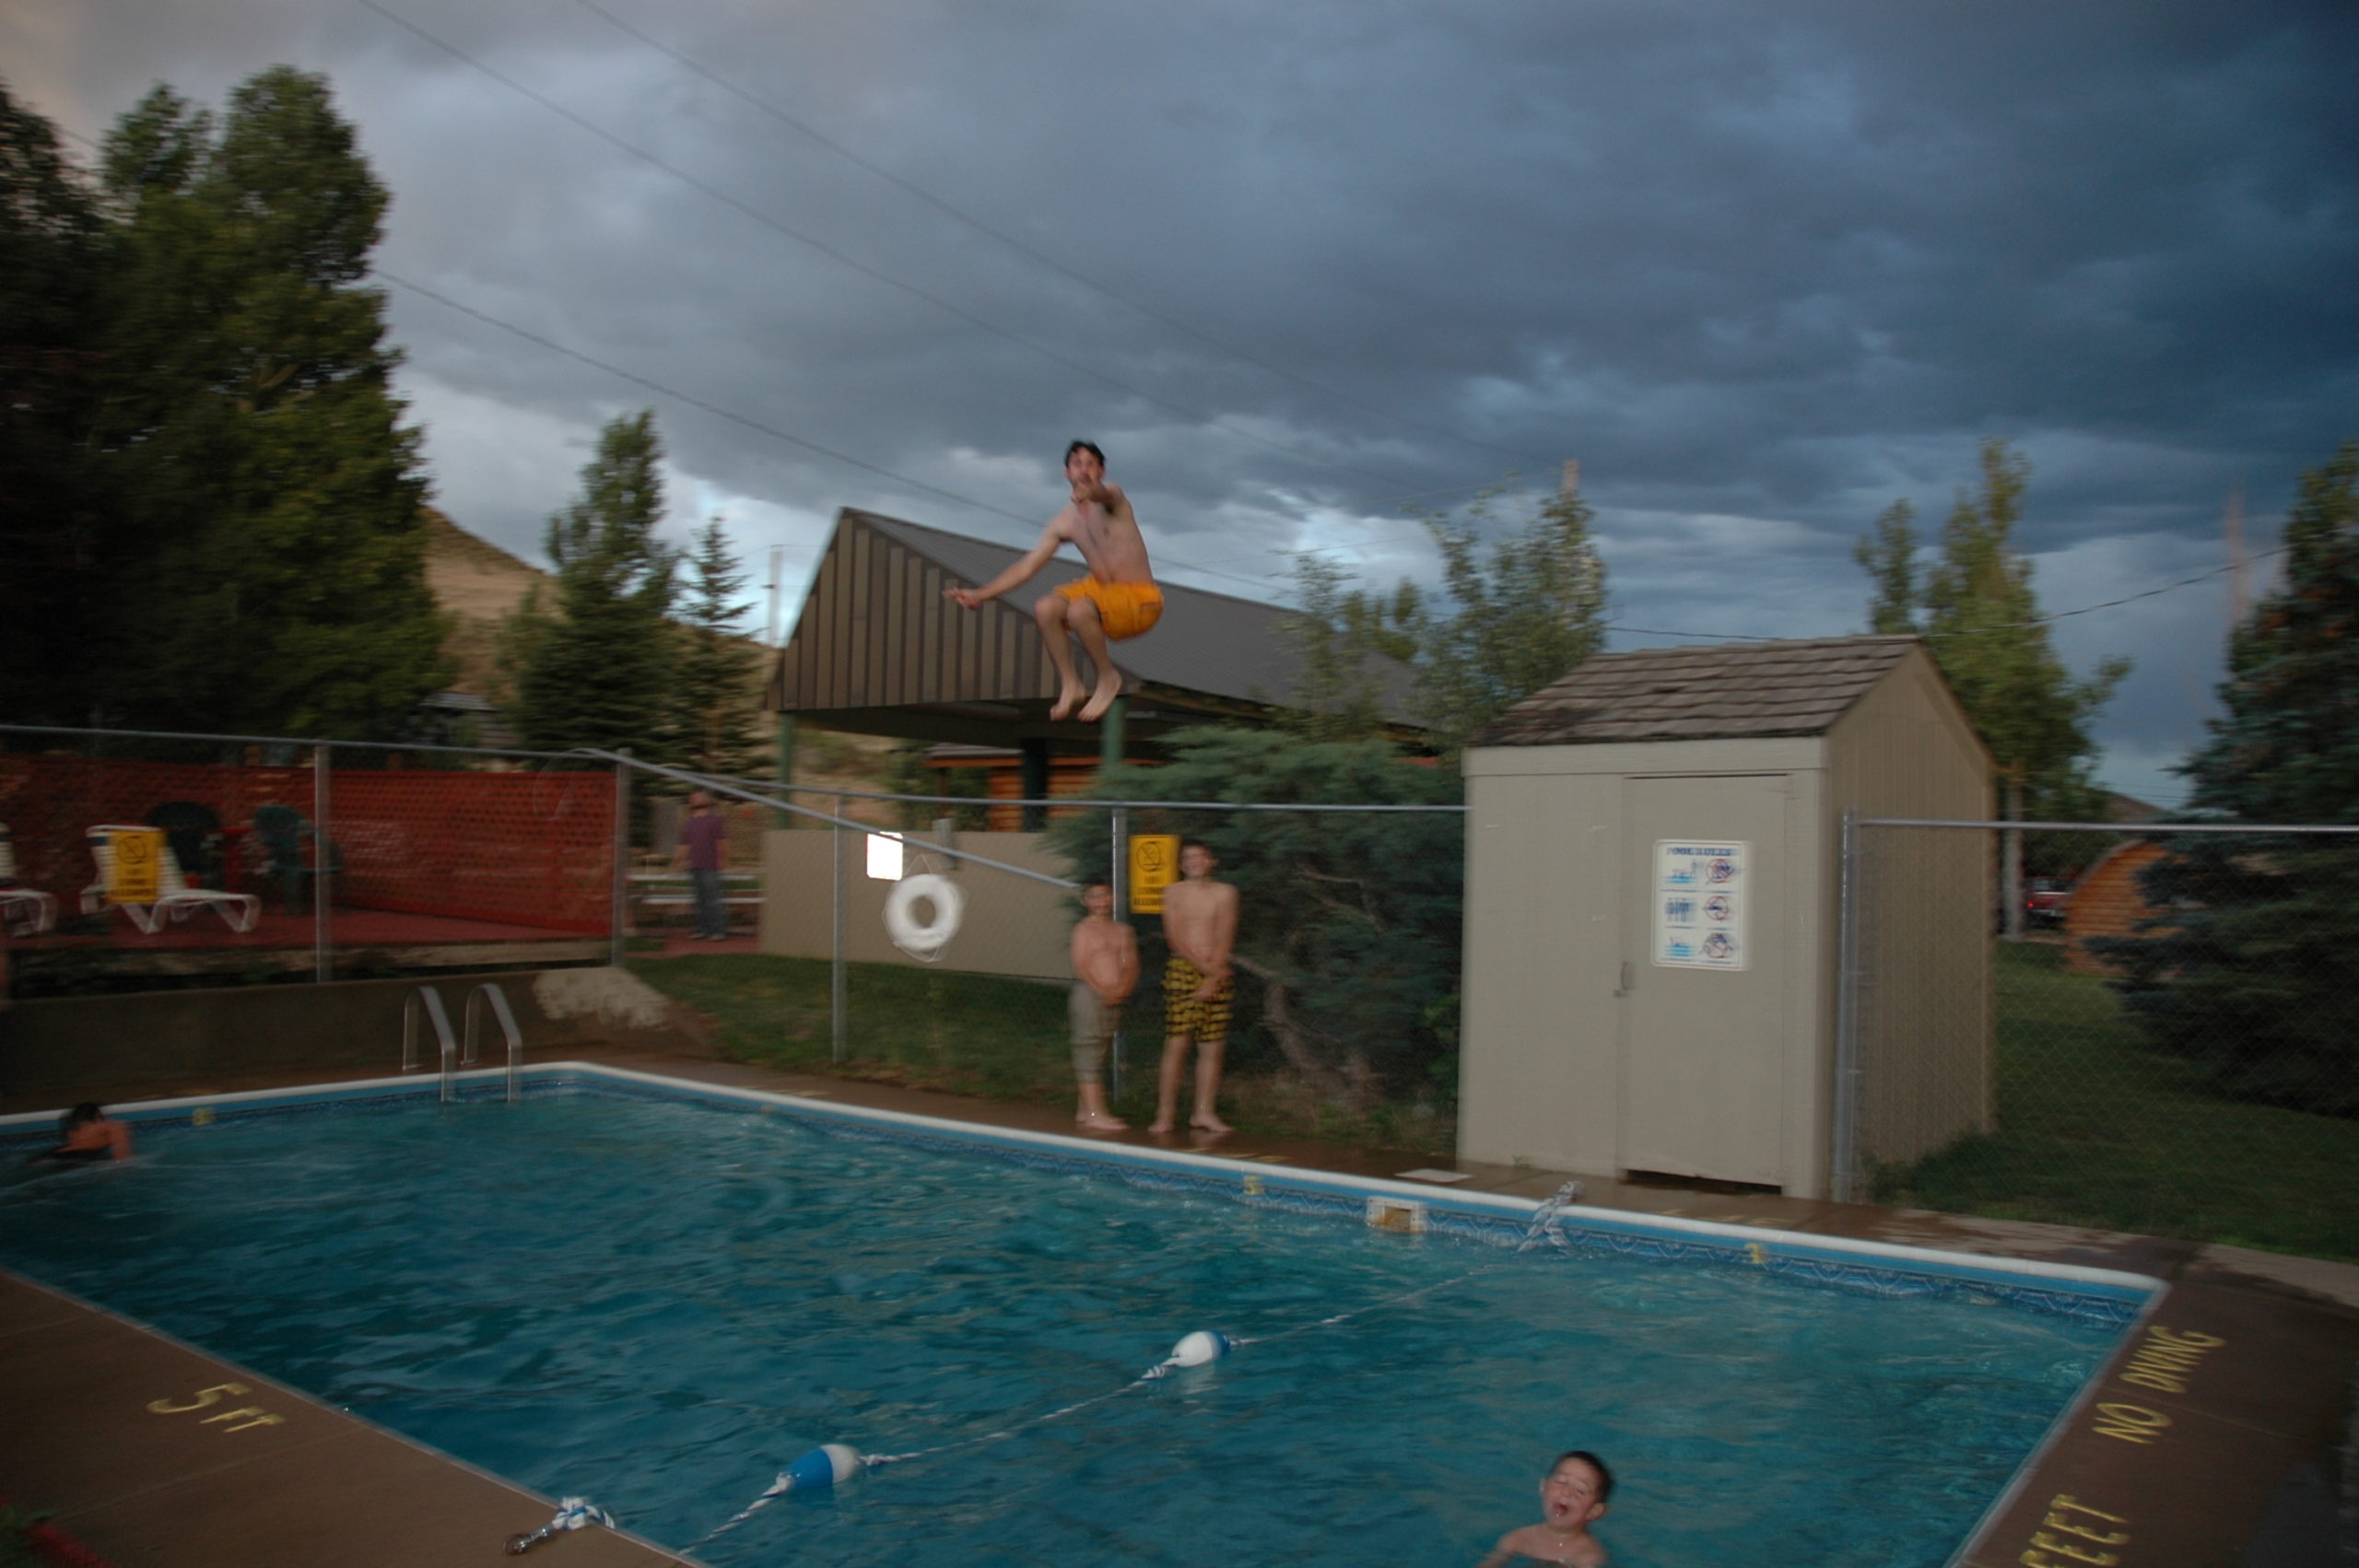 Northern Colorado Camping Trip - Michael Doig pool fun